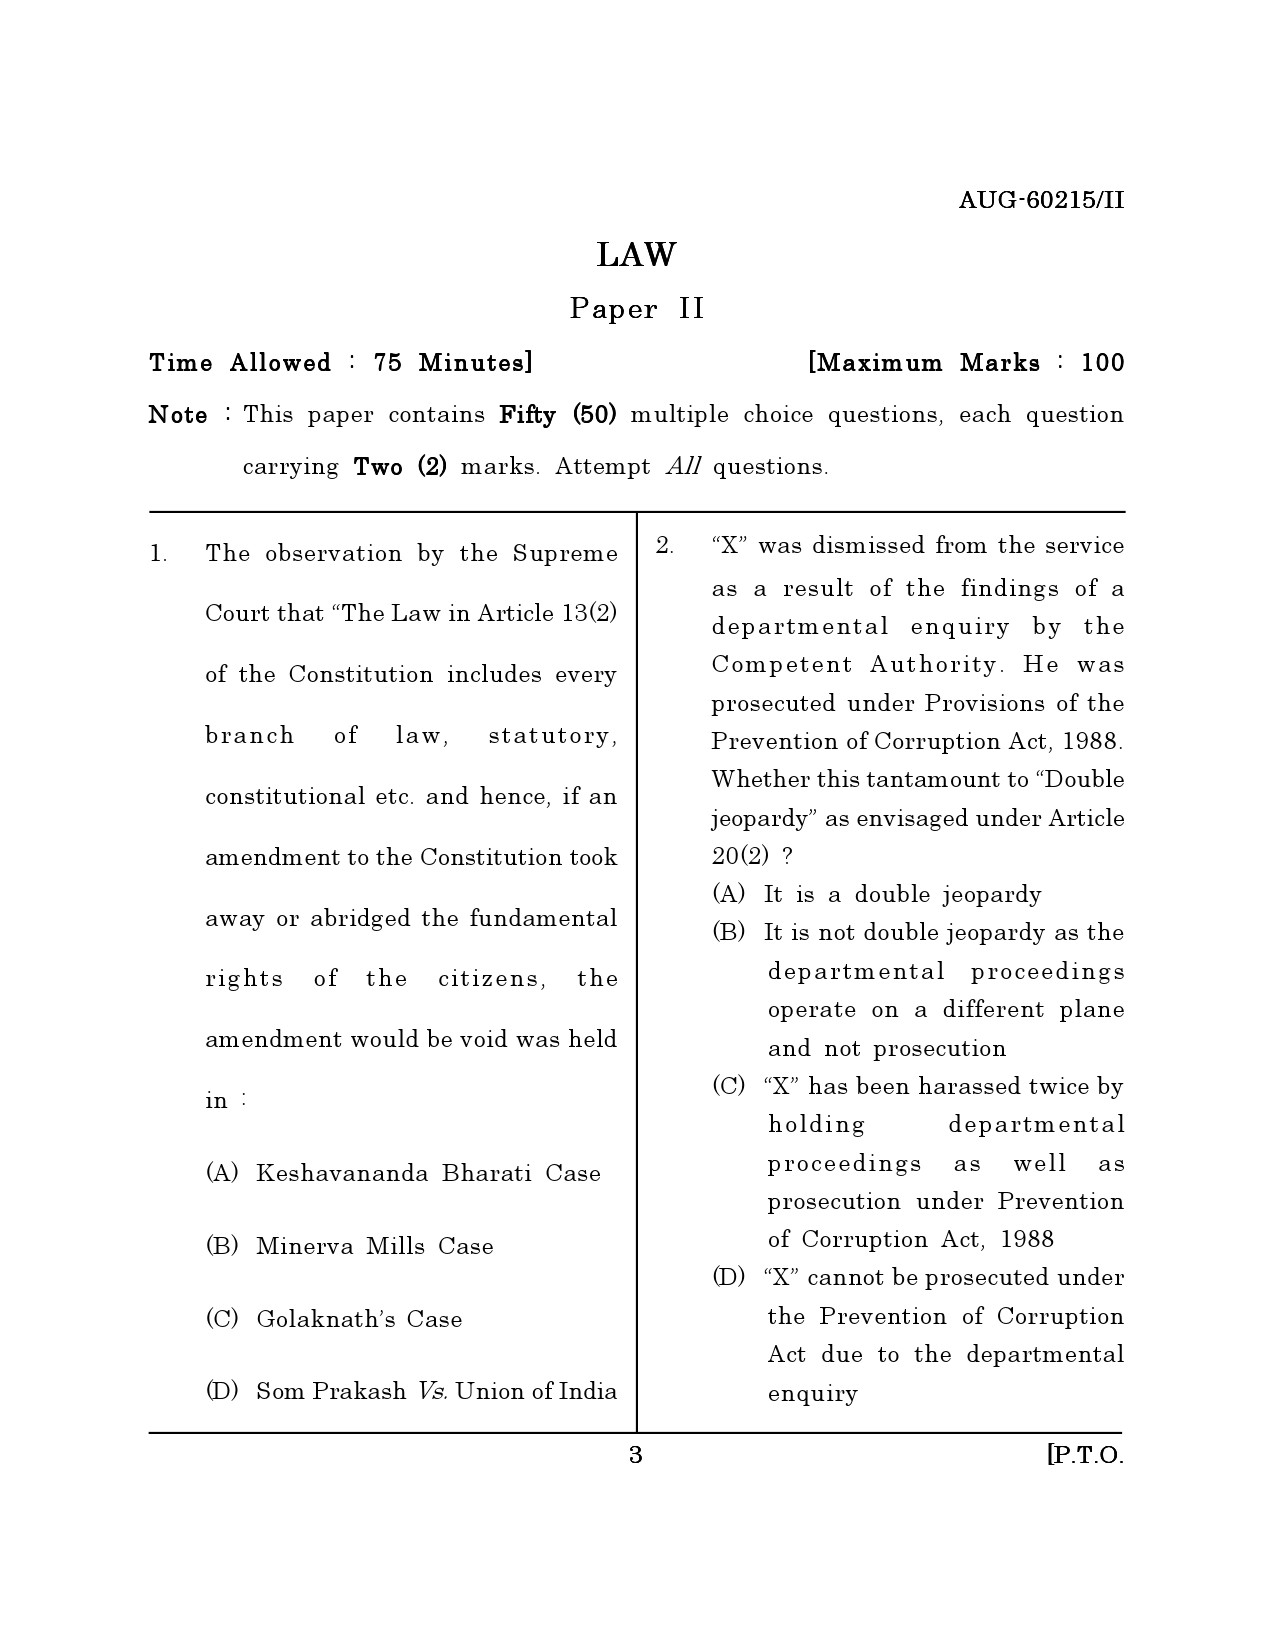 Maharashtra SET Law Question Paper II August 2015 2